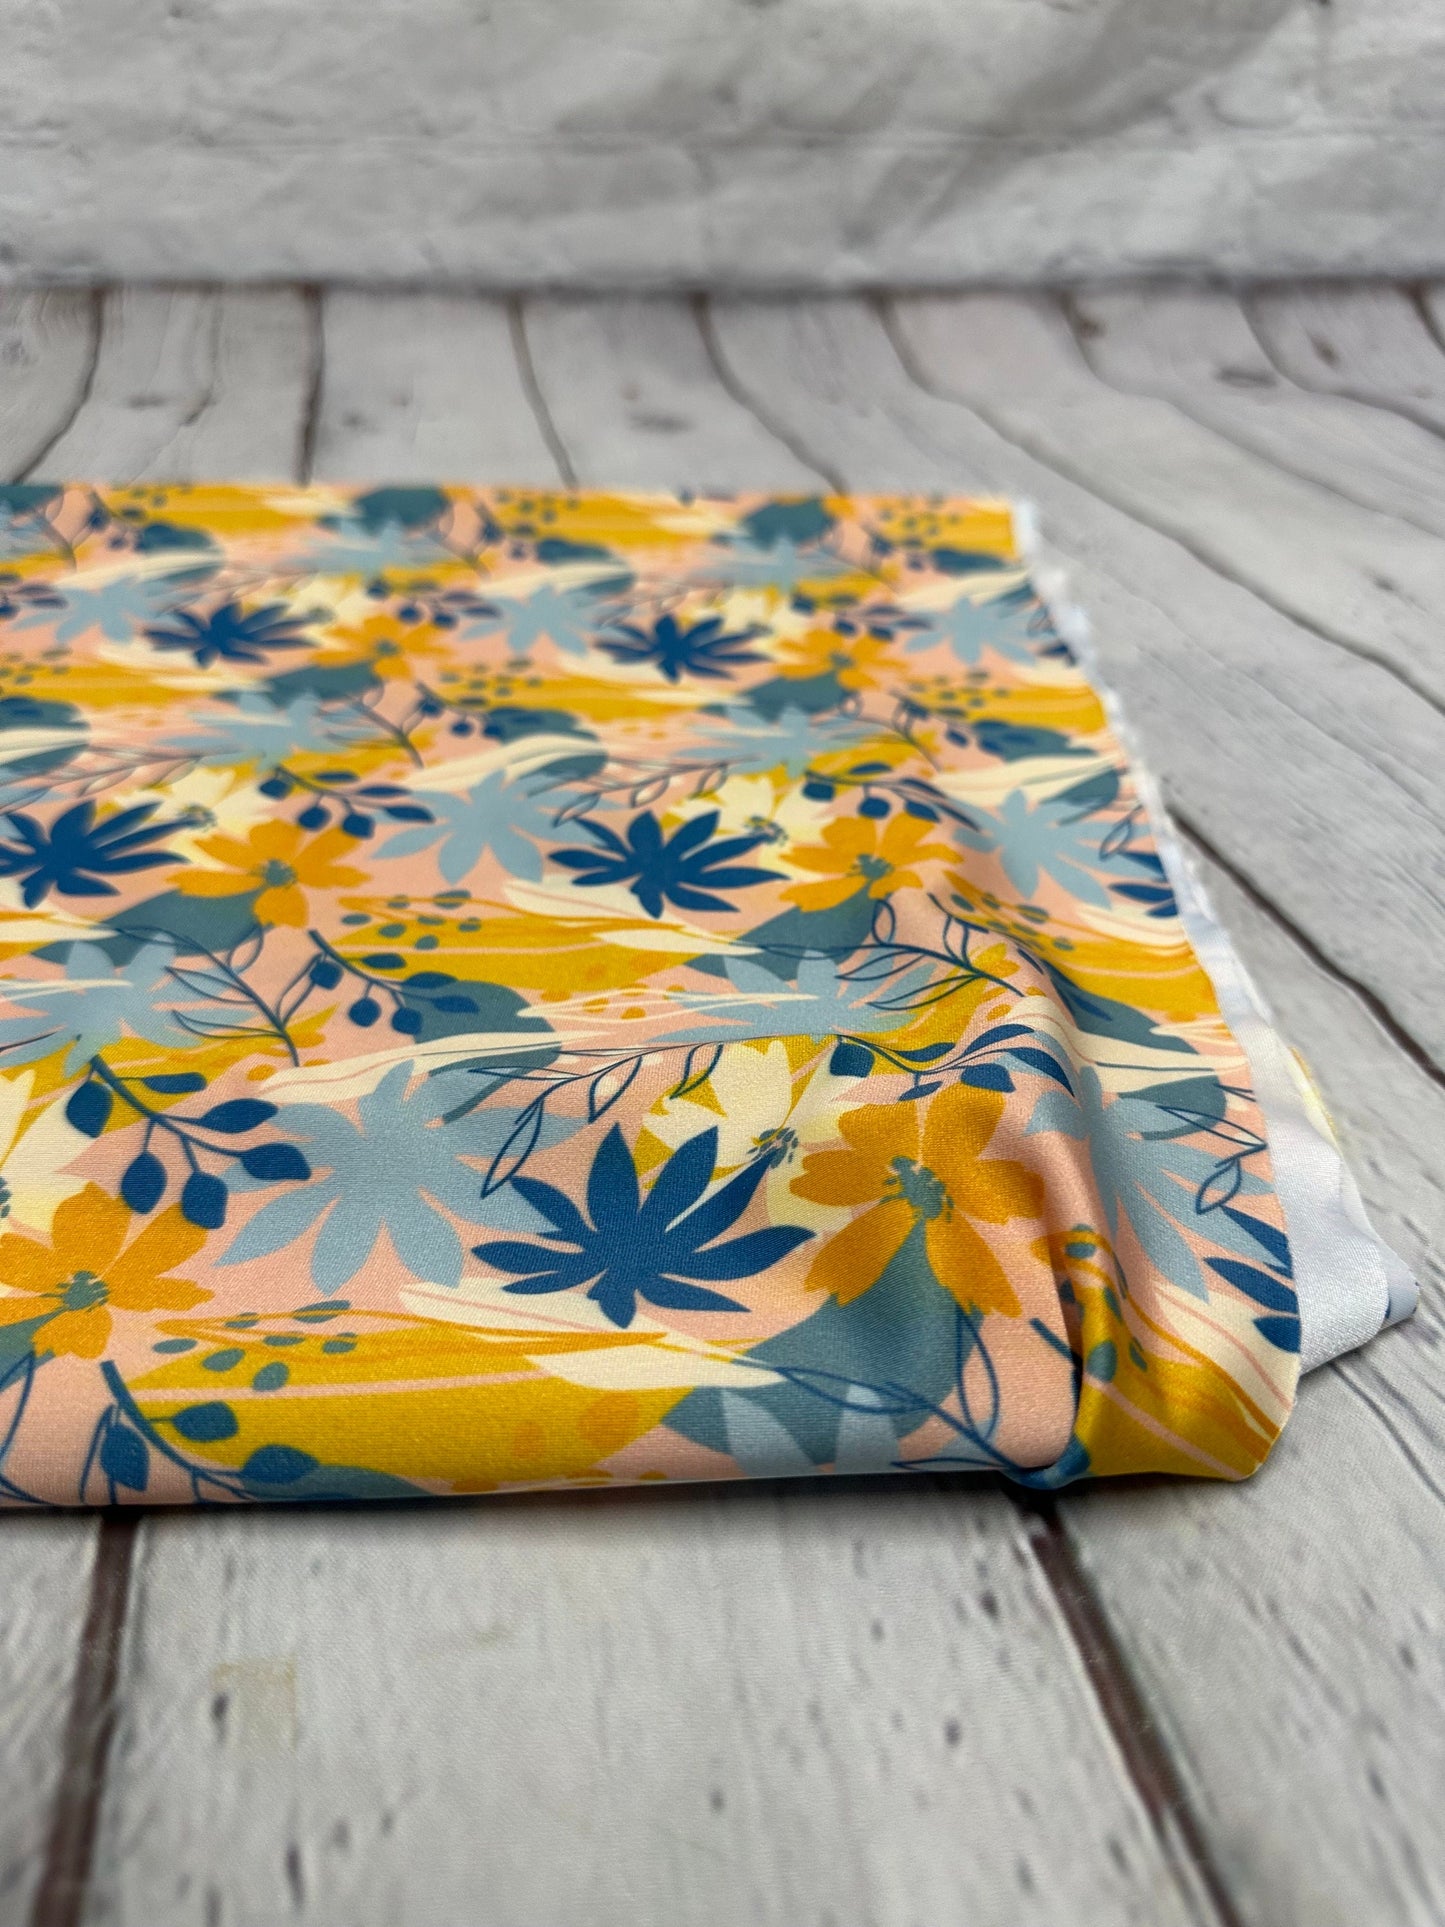 4 Way Stretch Print Spandex Fabric By The Yard Tricot Swim Wear Bikini Abstract Flower Boho Floral Geometric 280 GSM